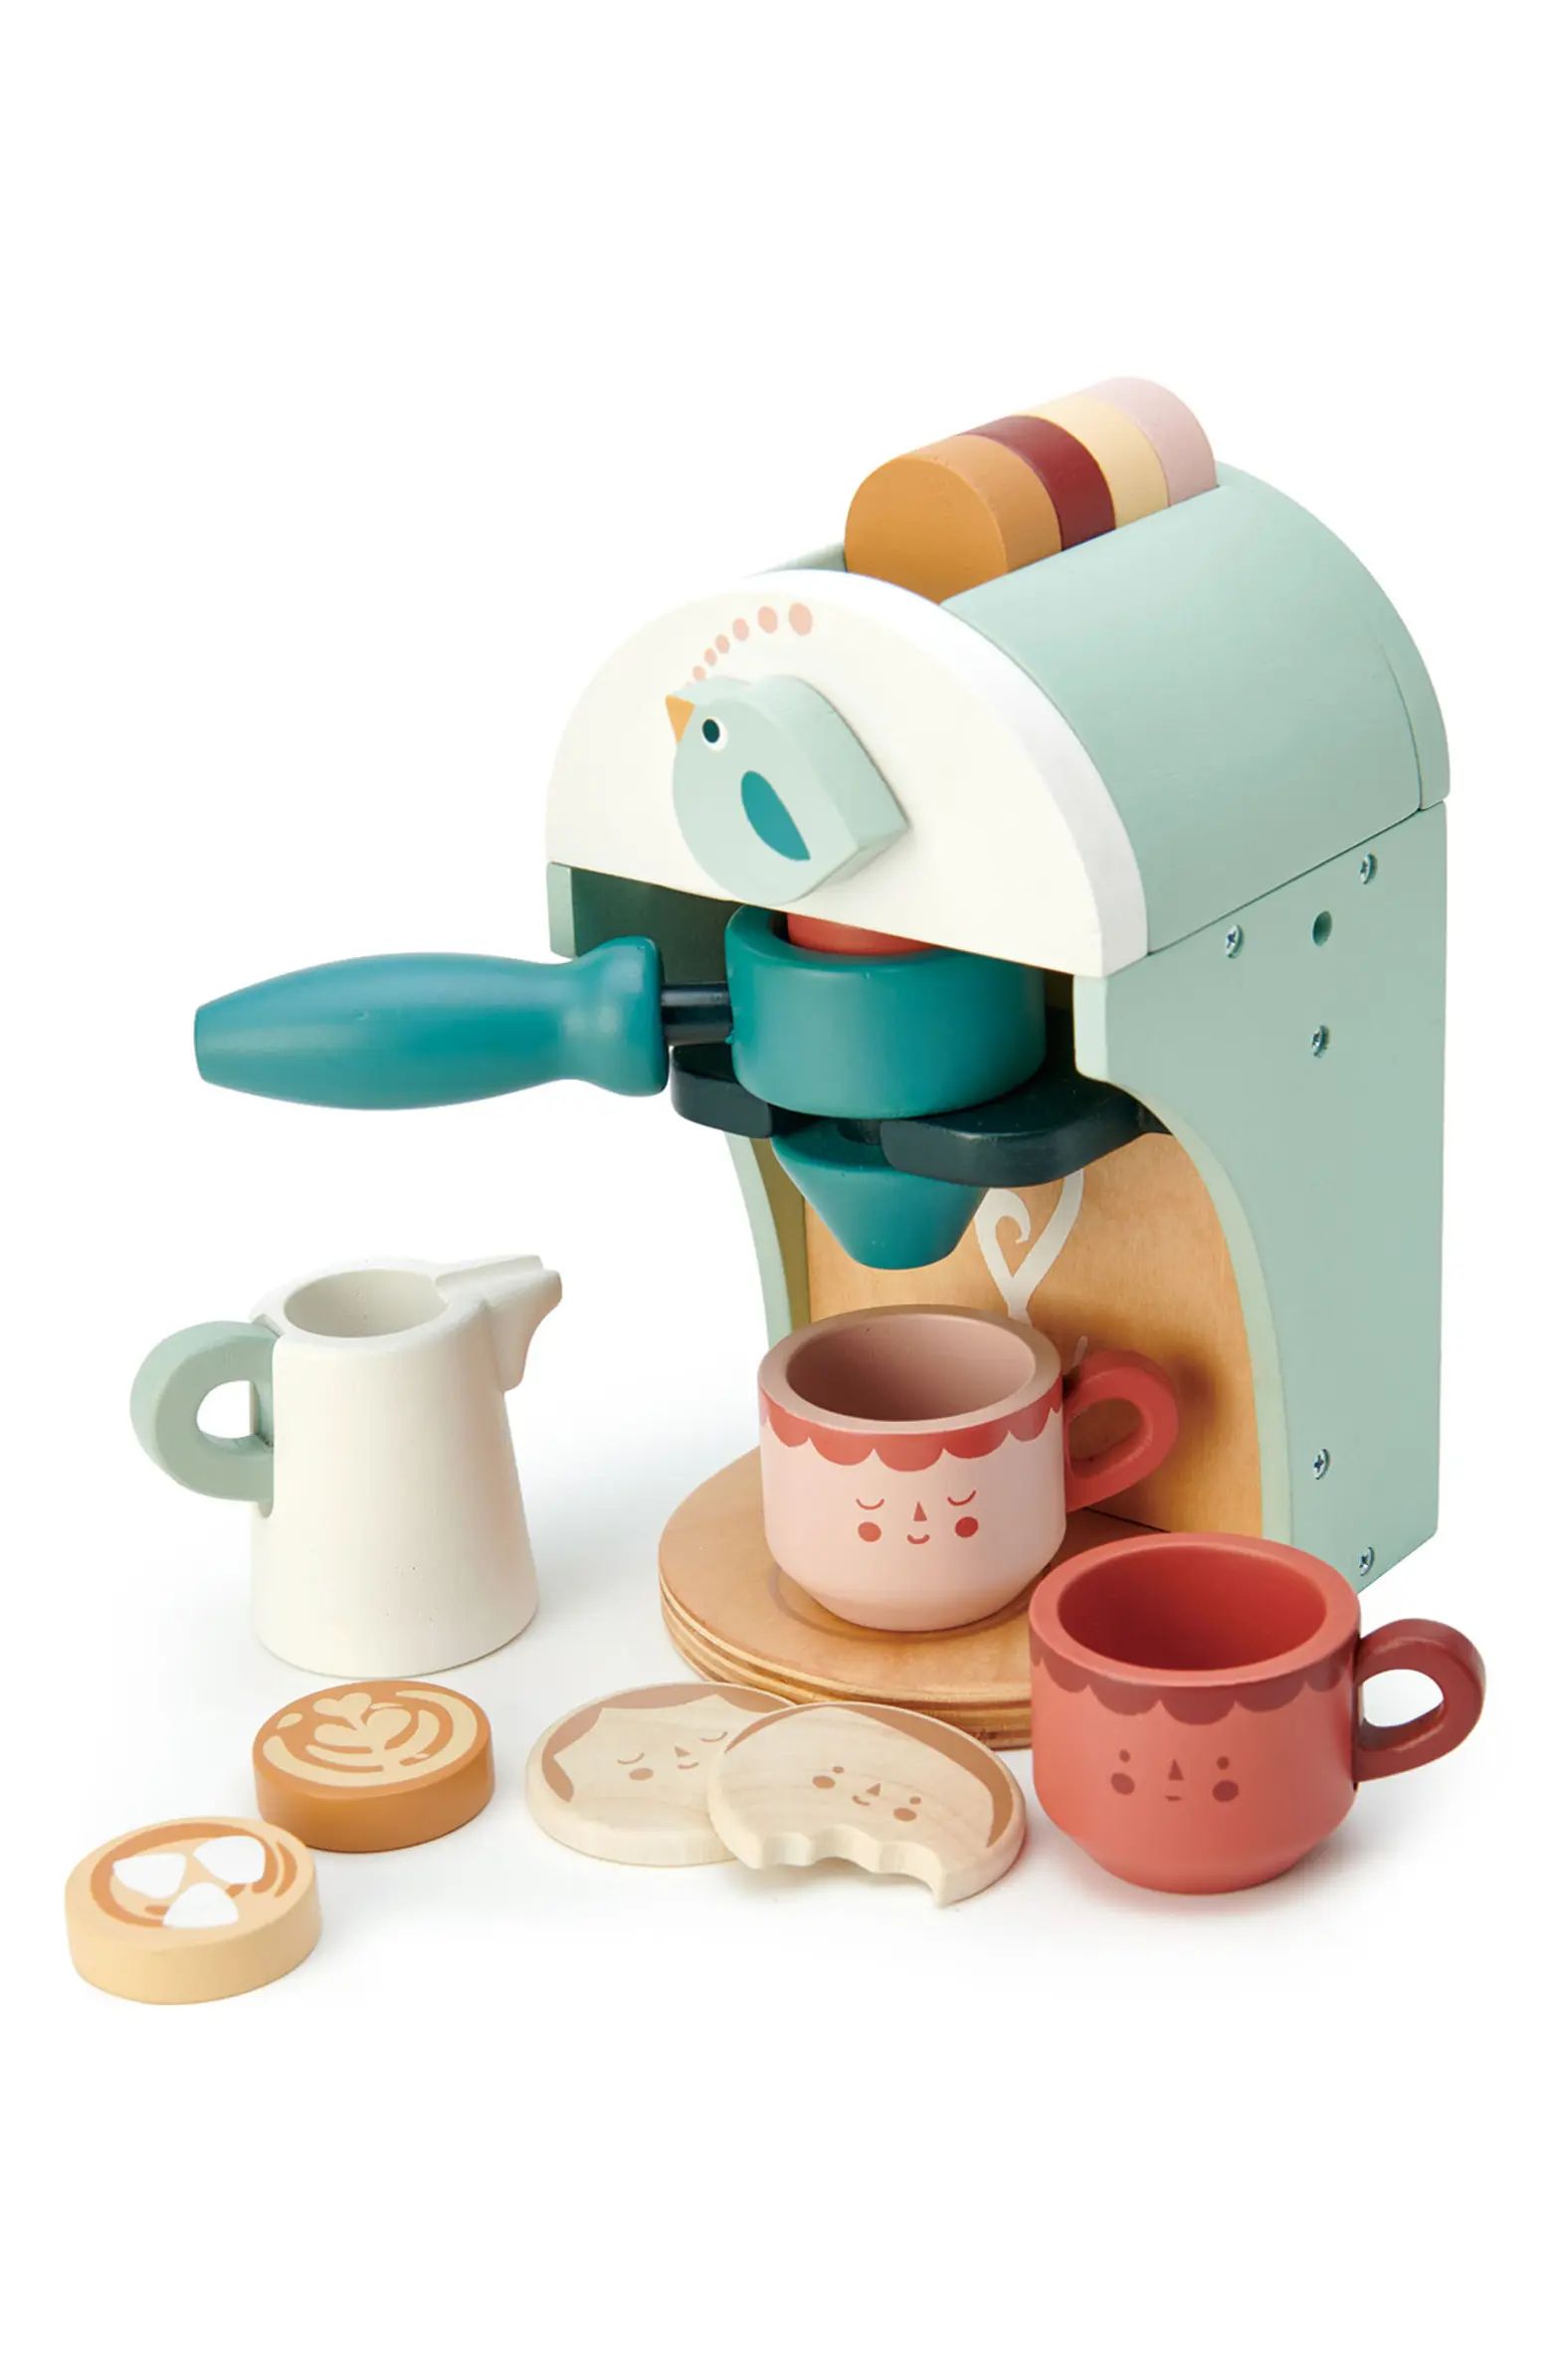 Babyccino Maker Toy Set | Nordstrom